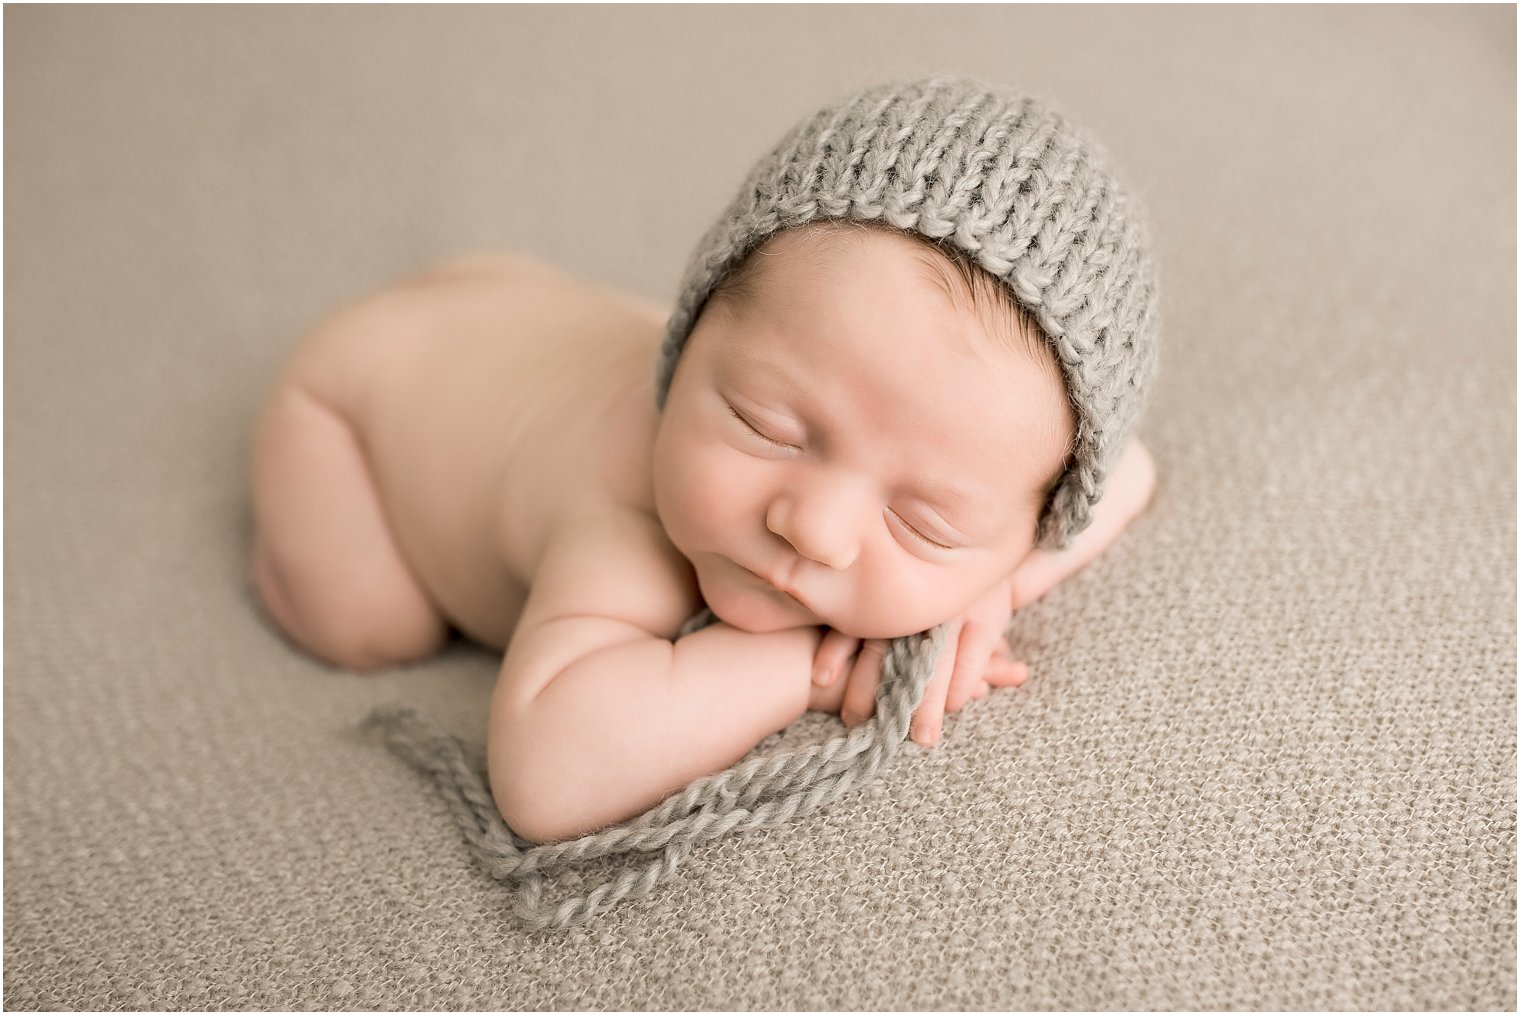 Sleeping newborn boy in gray hat | Photo by Idalia Photography